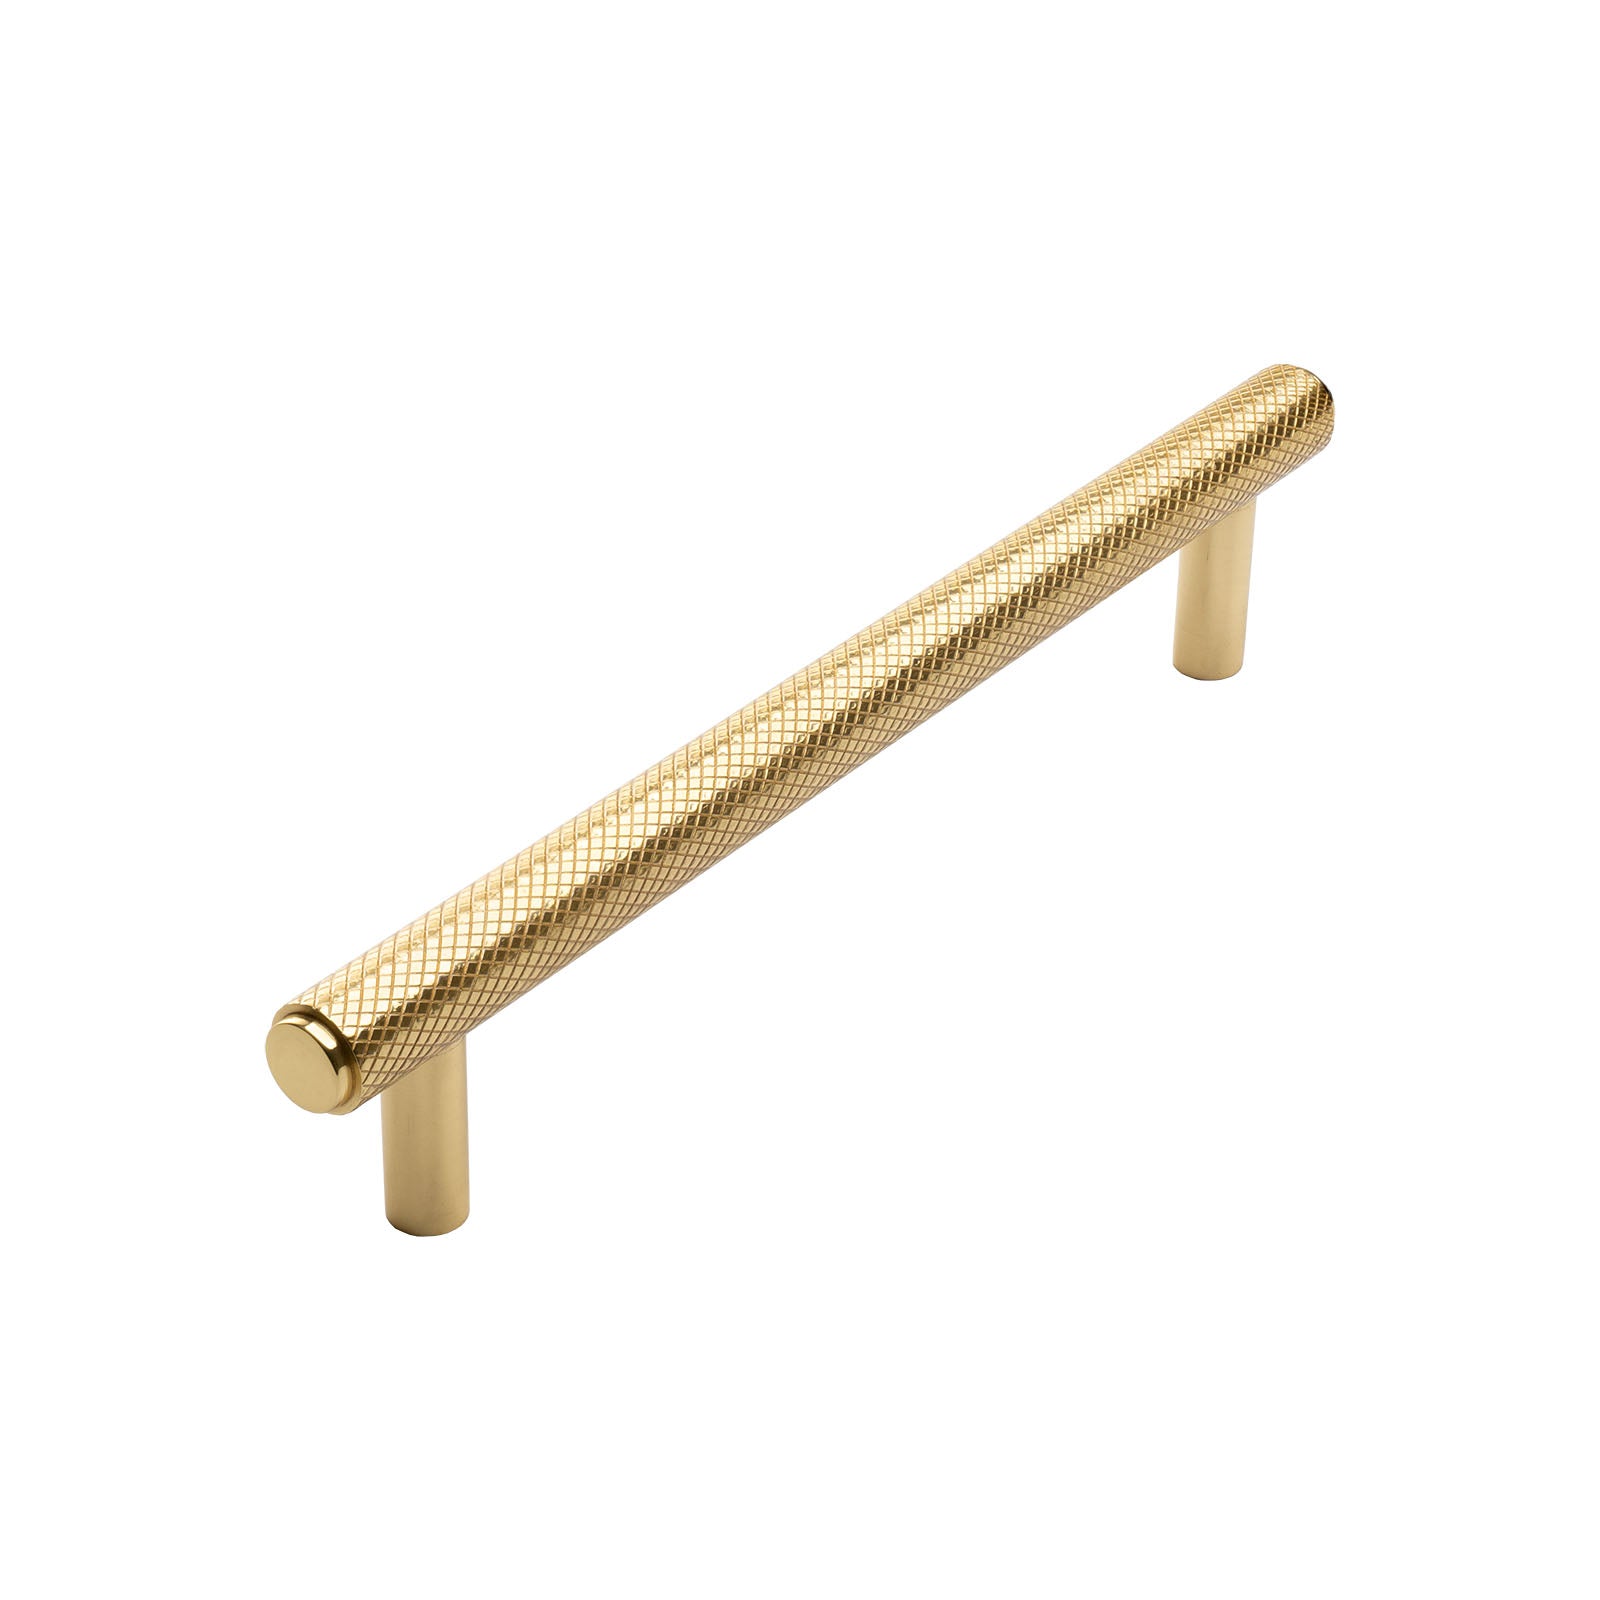 brass drawer handle